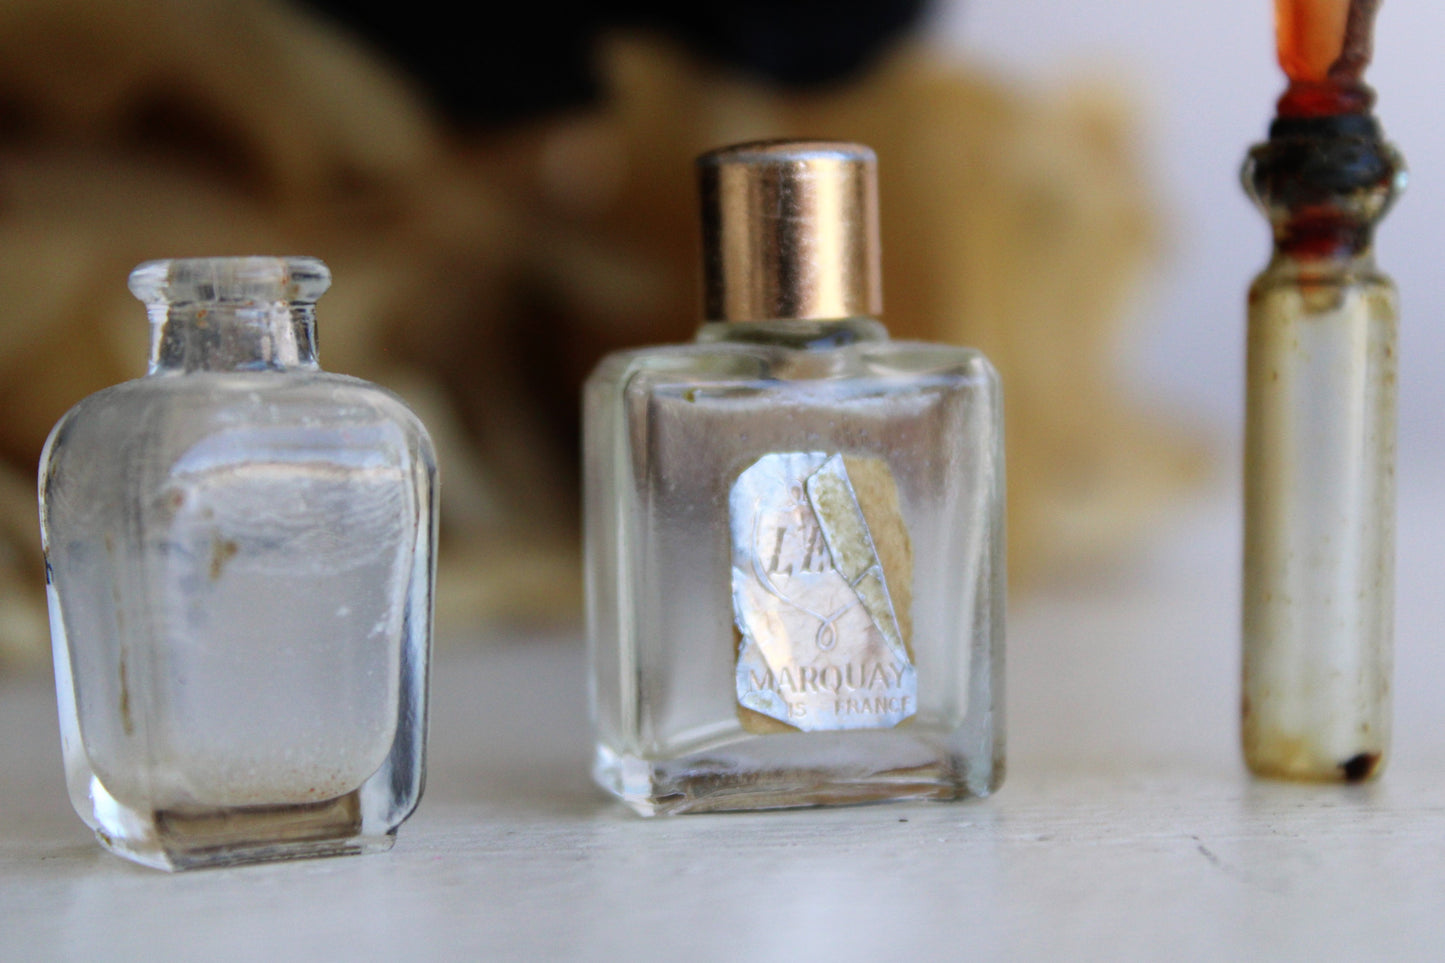 Vintage Perfume Bottles, L'elu Marquay, Emeraude, Pavlova, Etc, Sample Size Fragrance